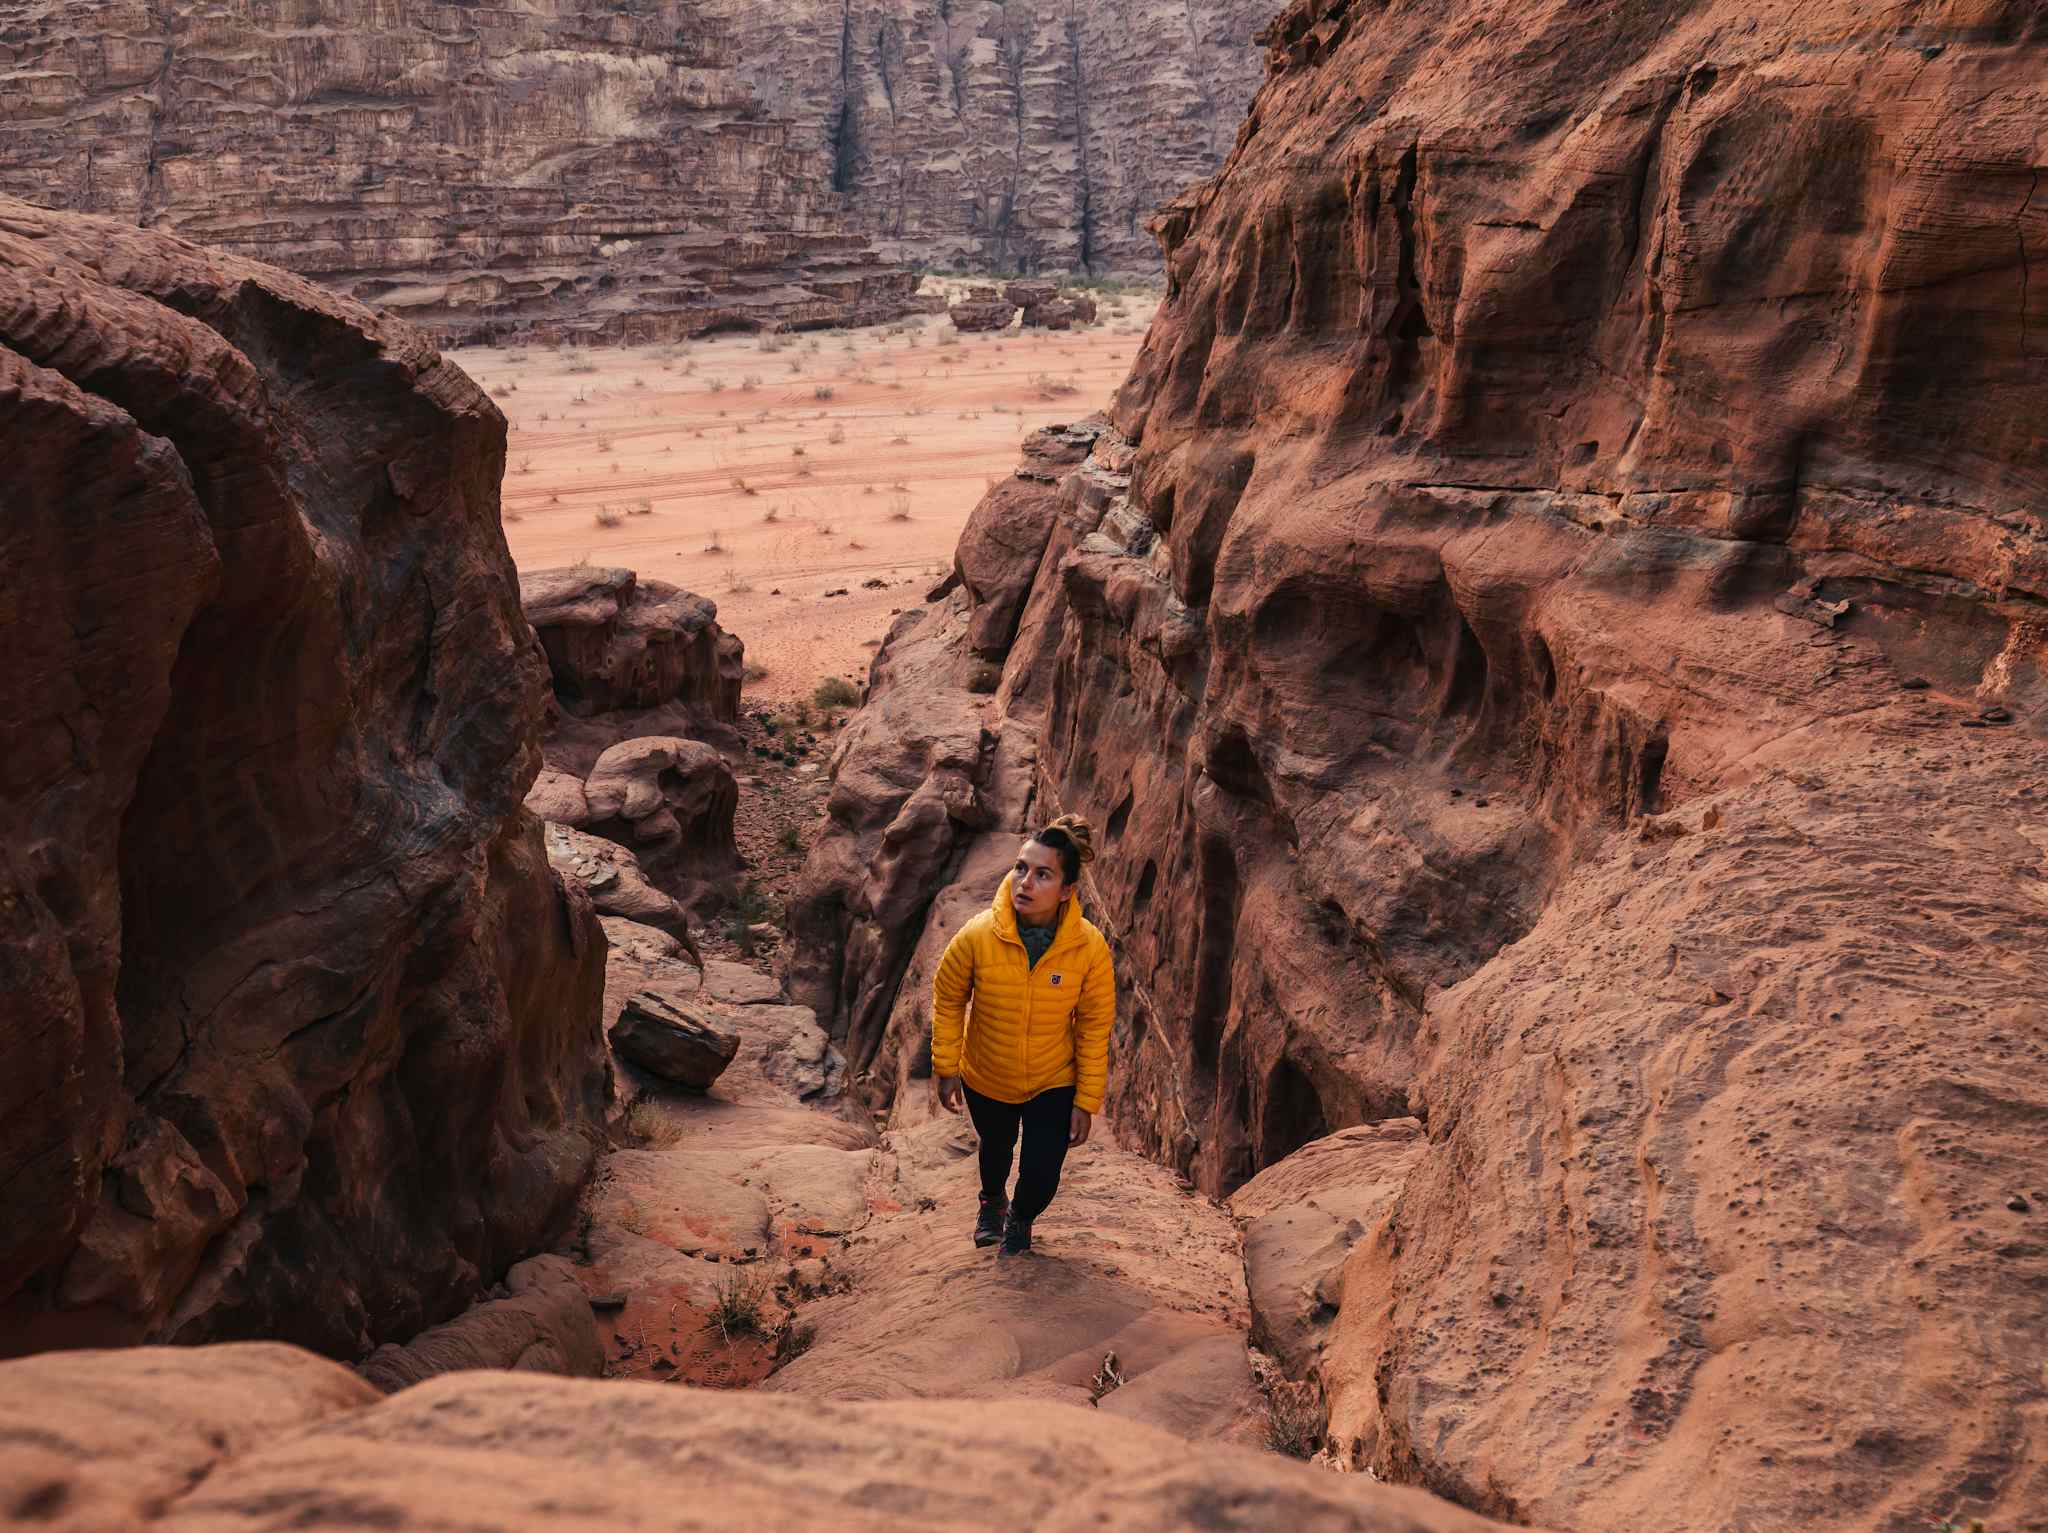 Wadi Rum Hike Jordan Trail
Host image - Experience Jordan / The Jordan Trail